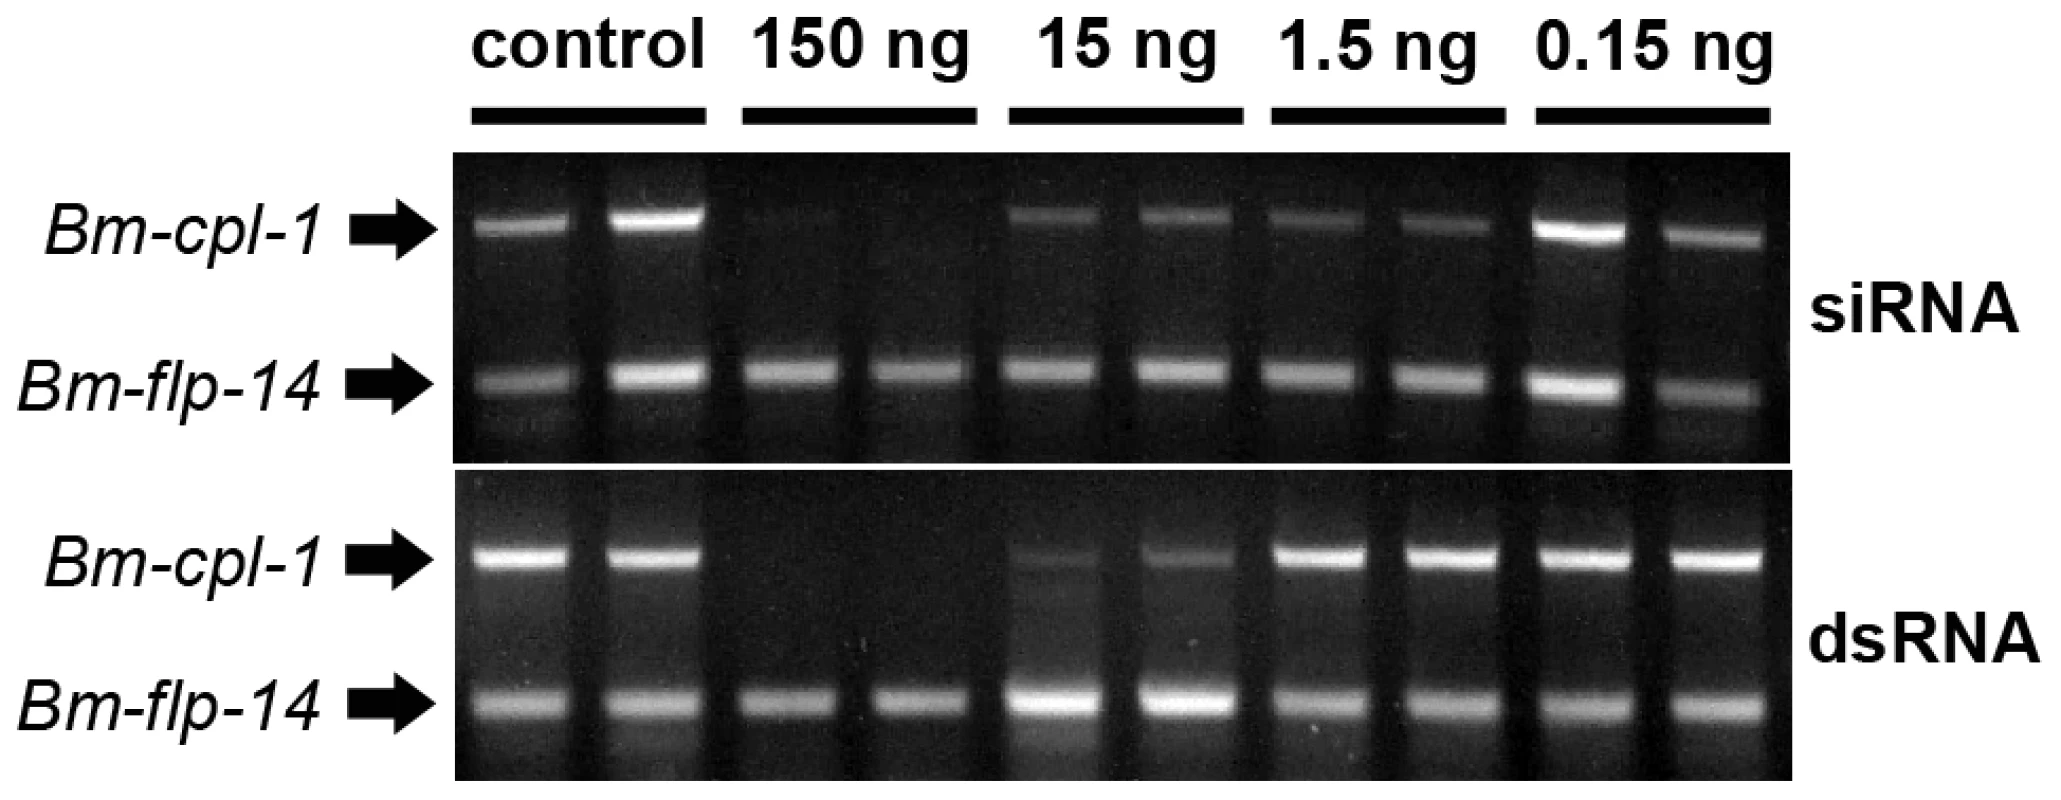 Concentration-dependent, <i>in vivo</i> suppression of <i>Brugia malayi</i> Cathepsin-L1 (<i>Bm-cpl-1</i>) using siRNA (Top) or dsRNA (Bottom) RNAi triggers.